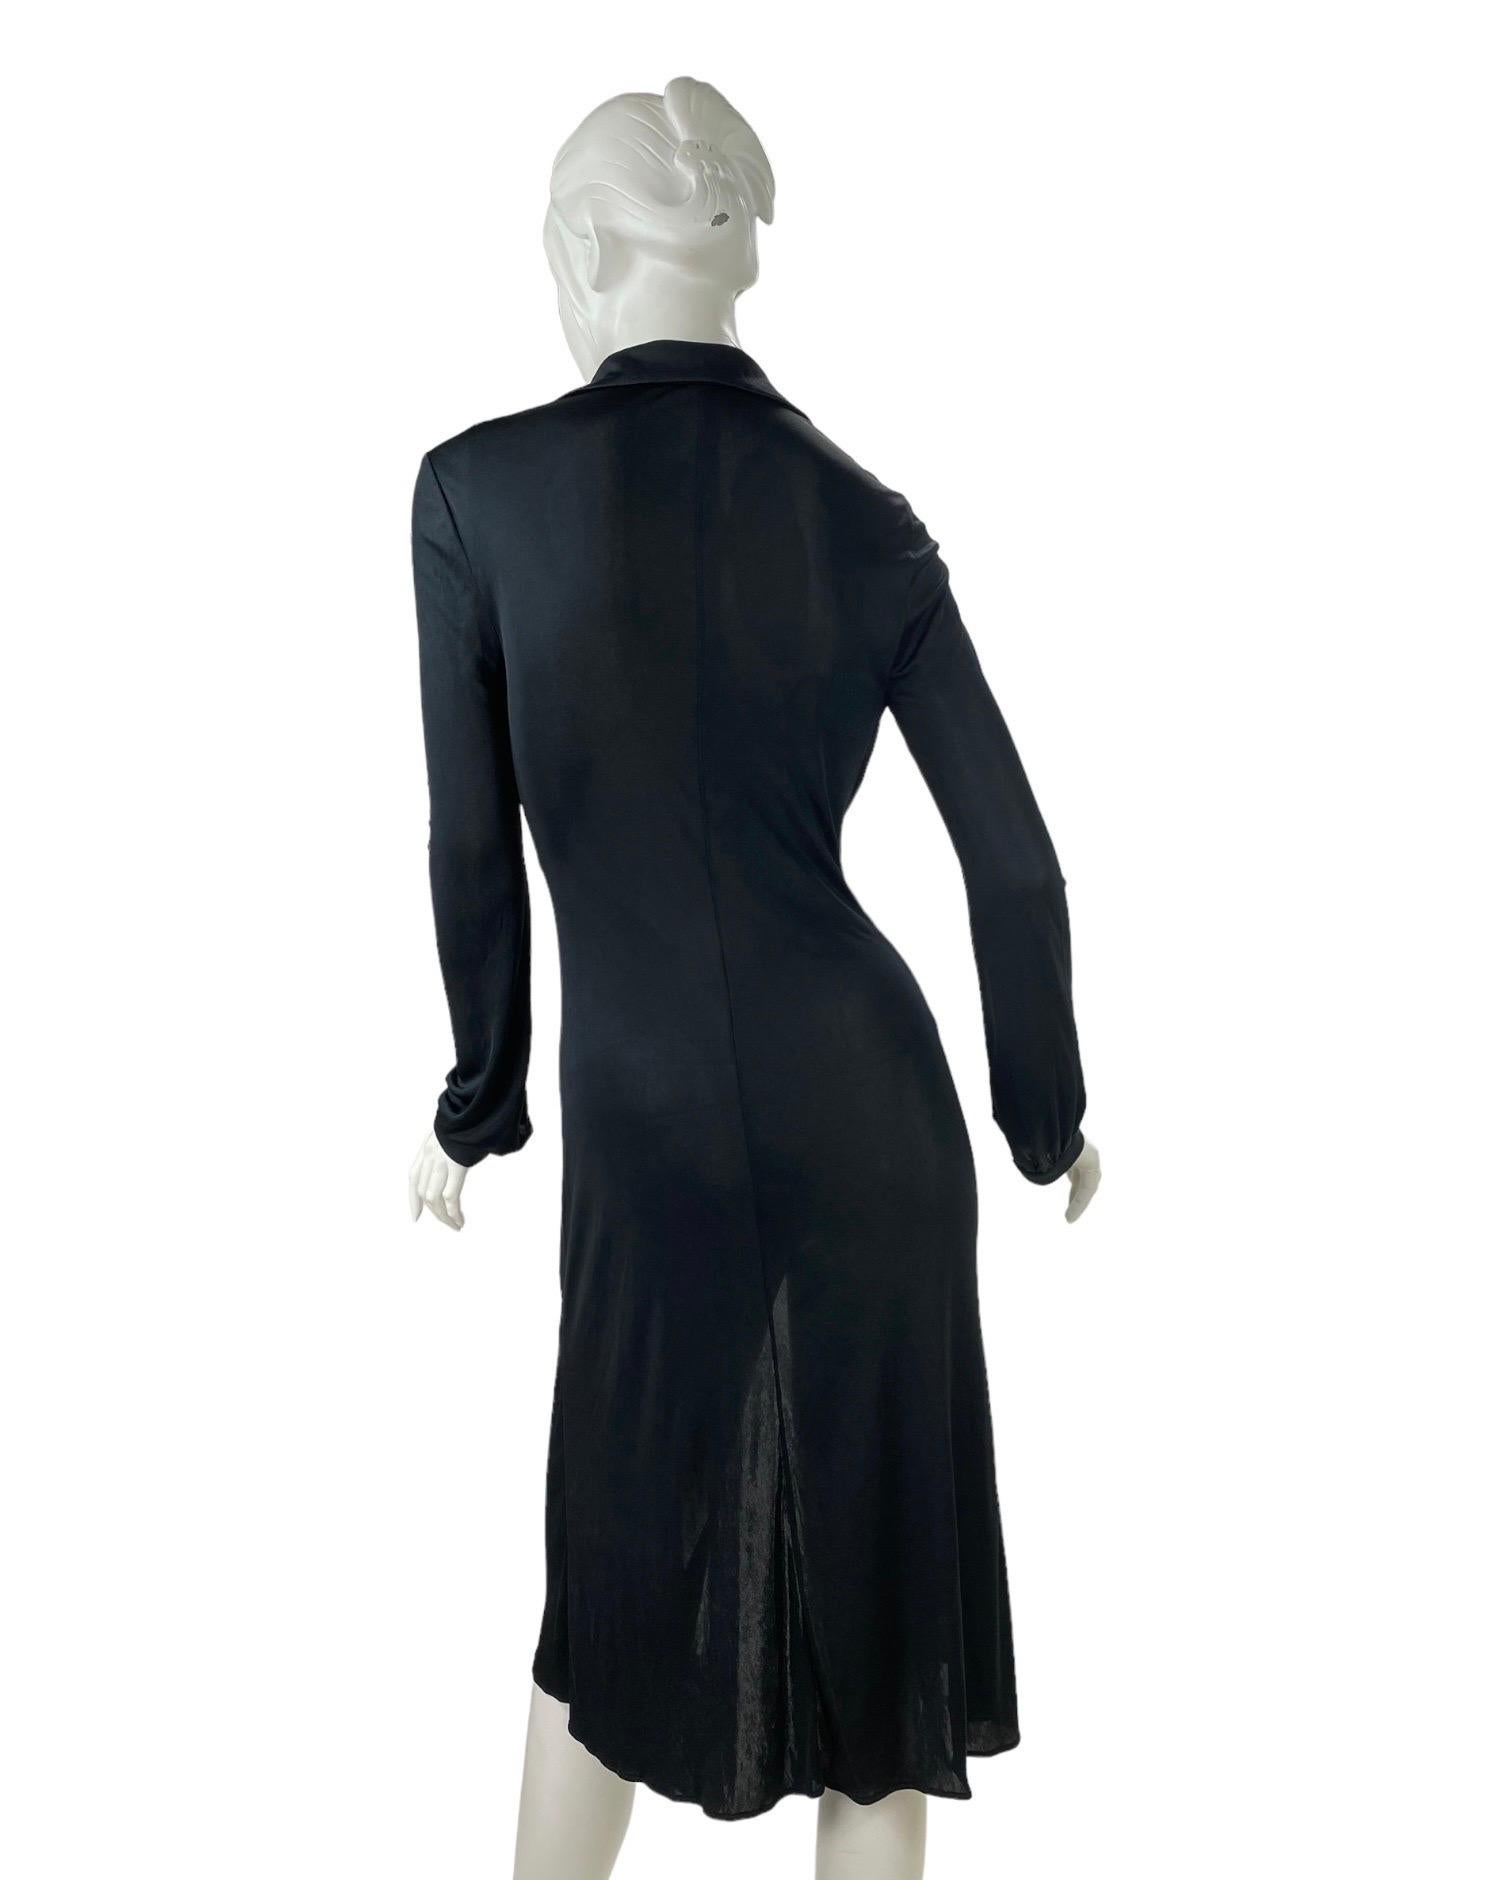 S/S 2000 Vintage Gianni Versace Couture Runway Black Deep V-Neck Dress For Sale 8